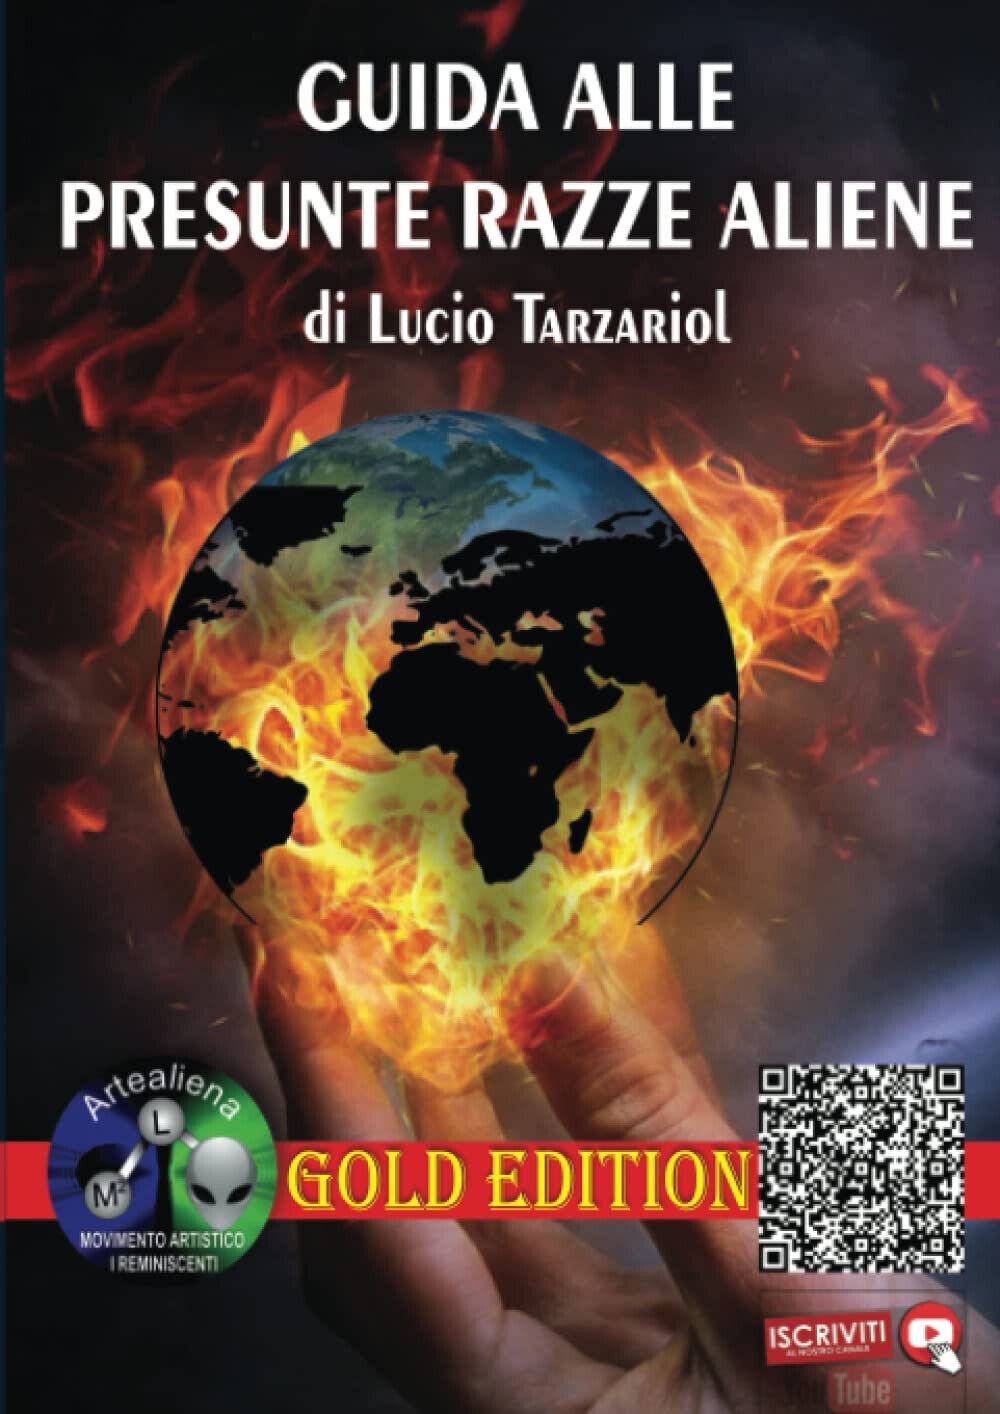 Guida alle presunte razze aliene - Lucio Tarzariol - StreetLib, 2022 libro usato